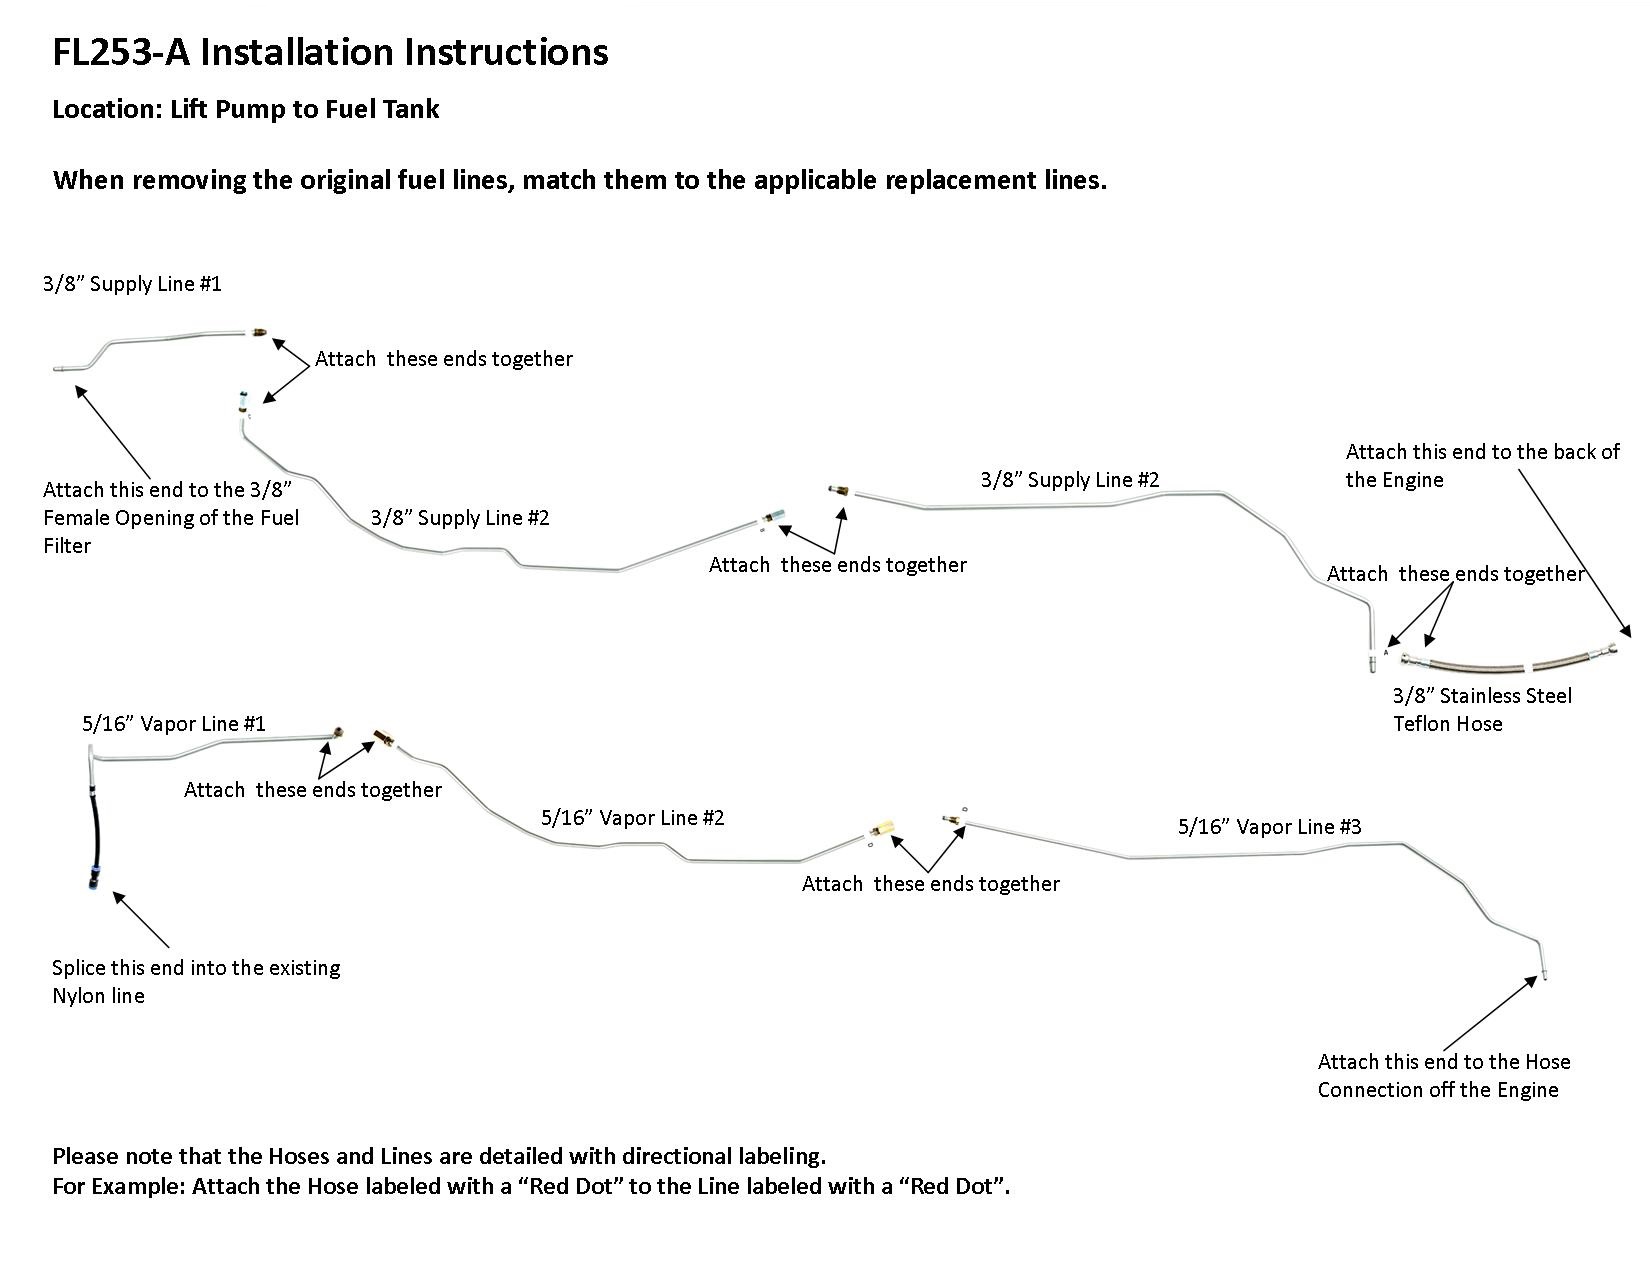 03-04-saturn-ion-installation-instructions-fl253-a-3-.jpg